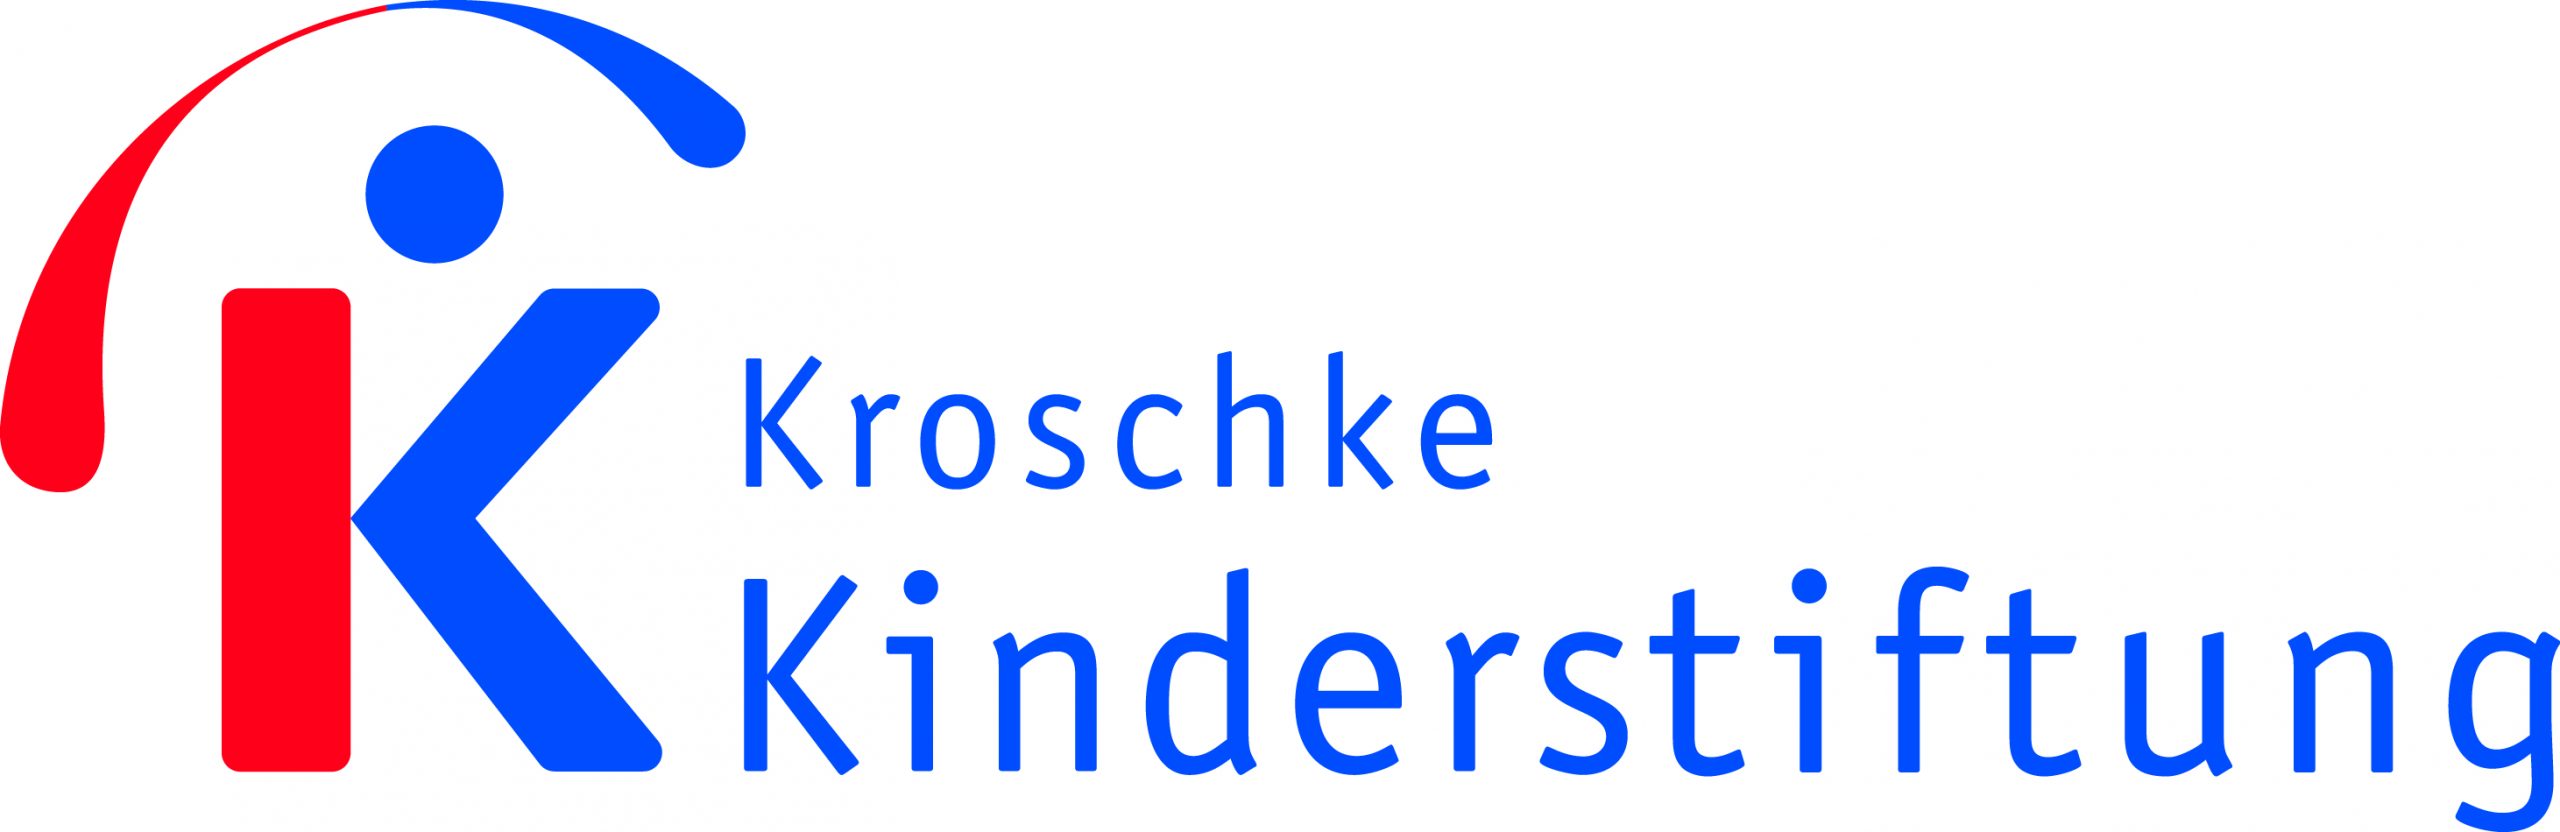 Logo Kroschke Kinderstiftung 4CCMYK scaled